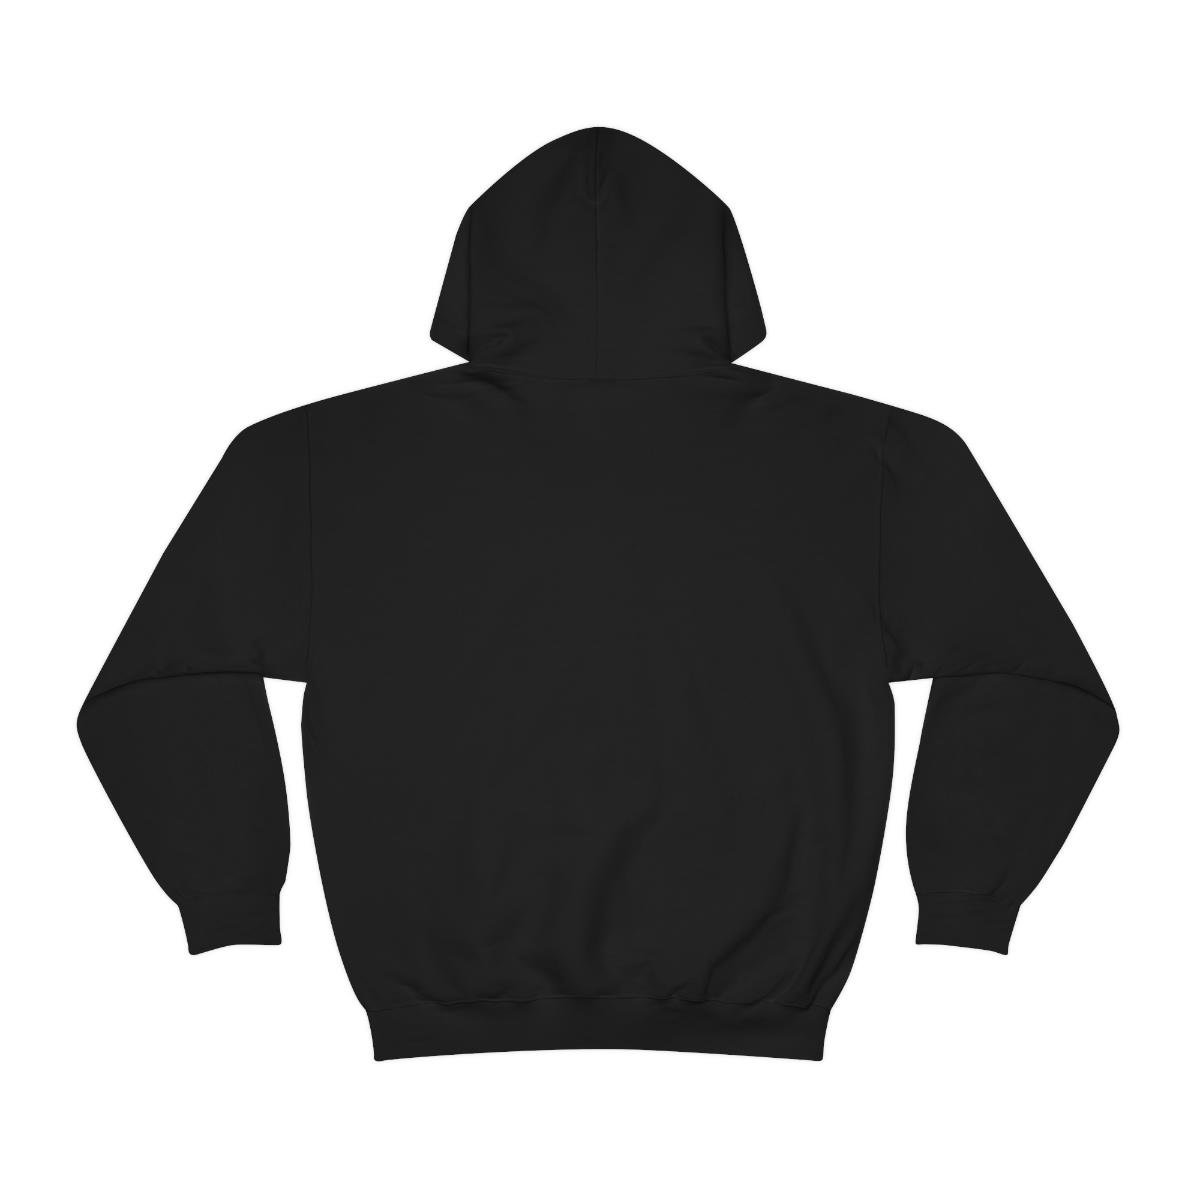 Messenger – Blind Sided Pullover Hooded Sweatshirt